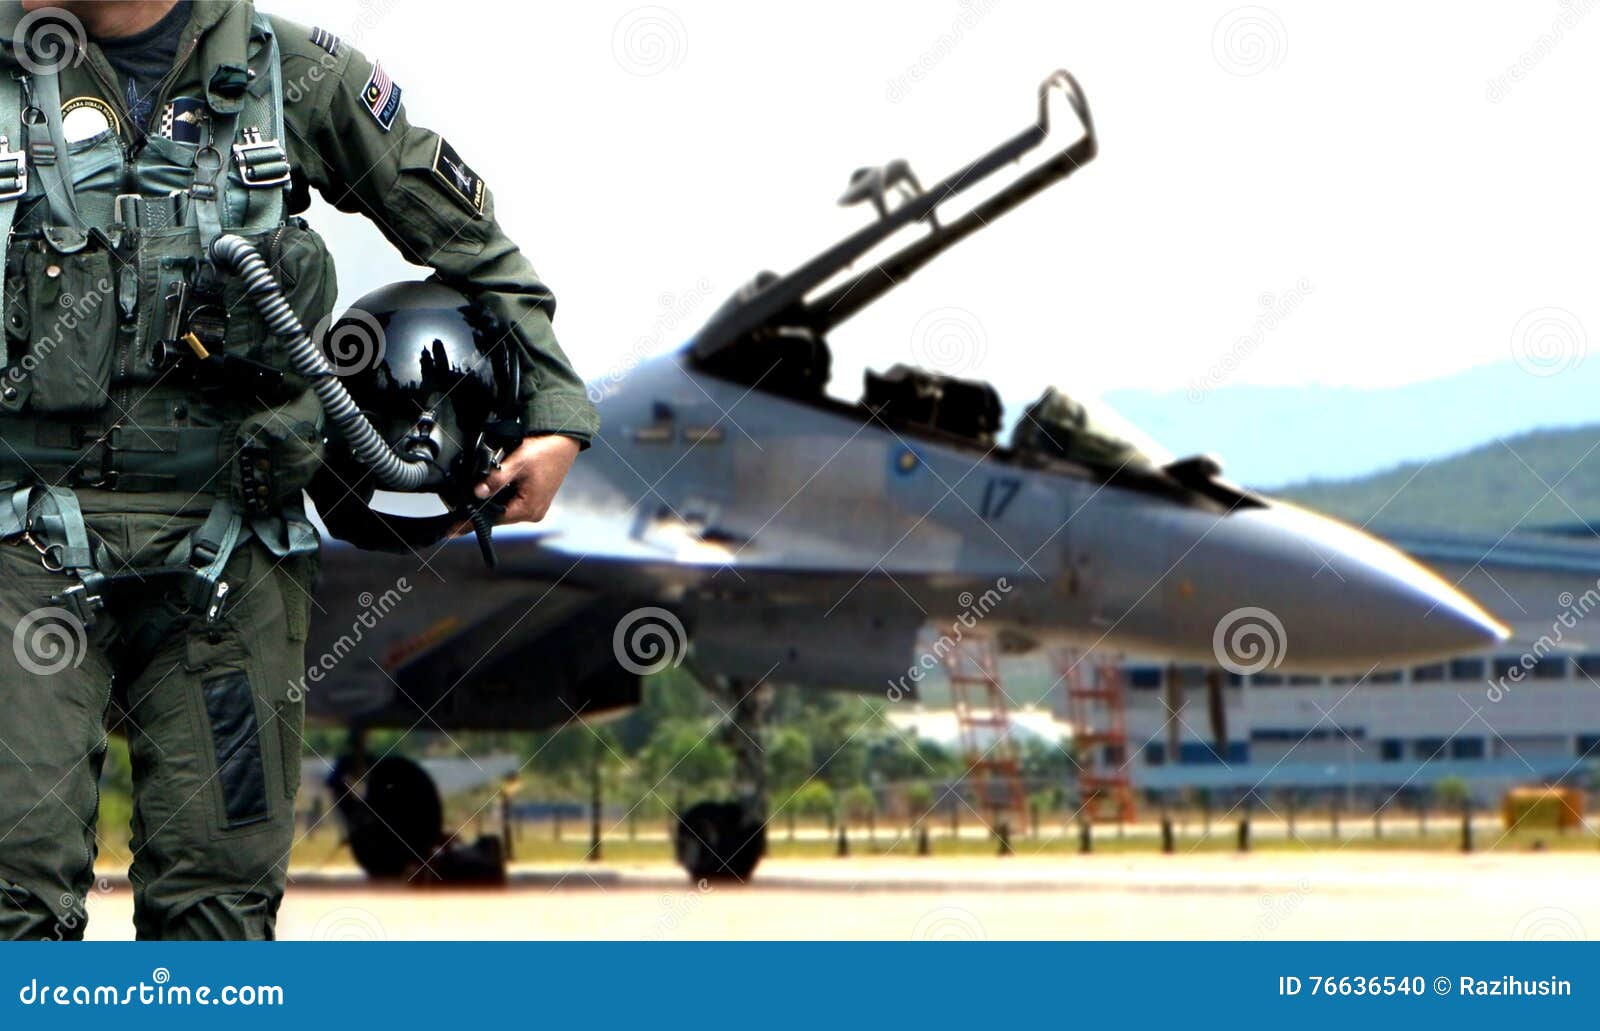 pilot walking away from jet fighter